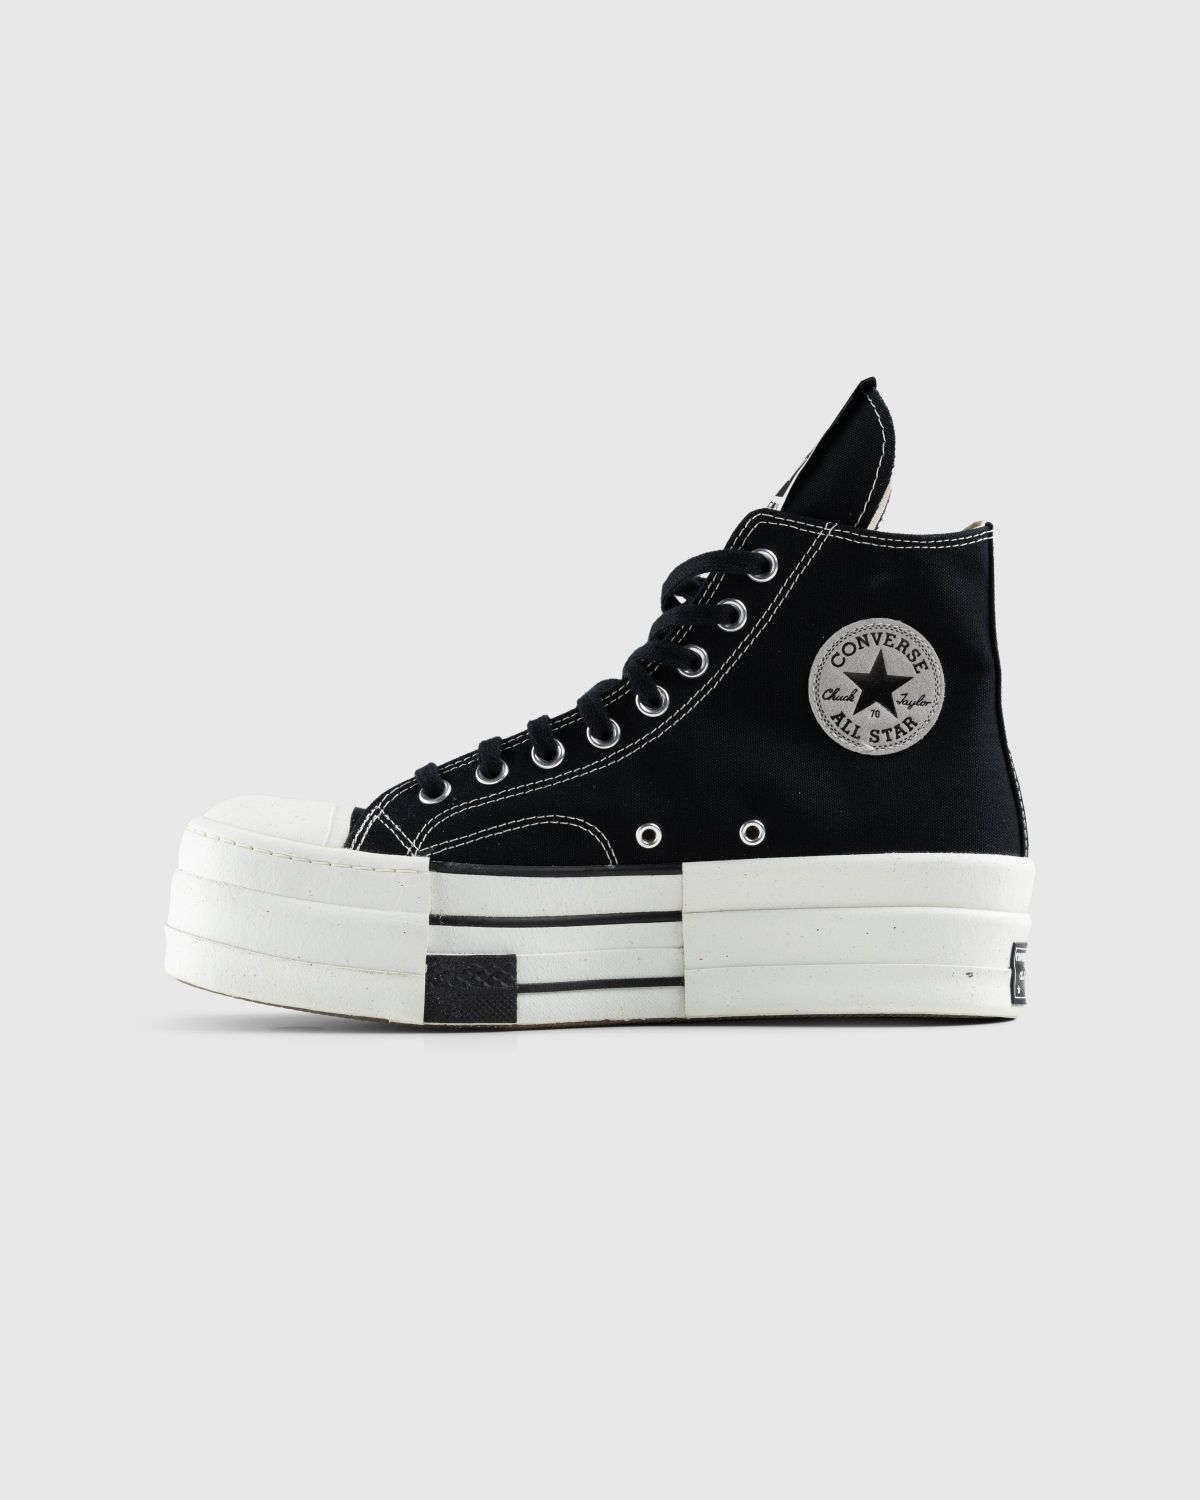 Converse x DRKSHDW – DBL DRKSTAR Chuck 70 HI Black/Egret/White - Sneakers - Multi - Image 2